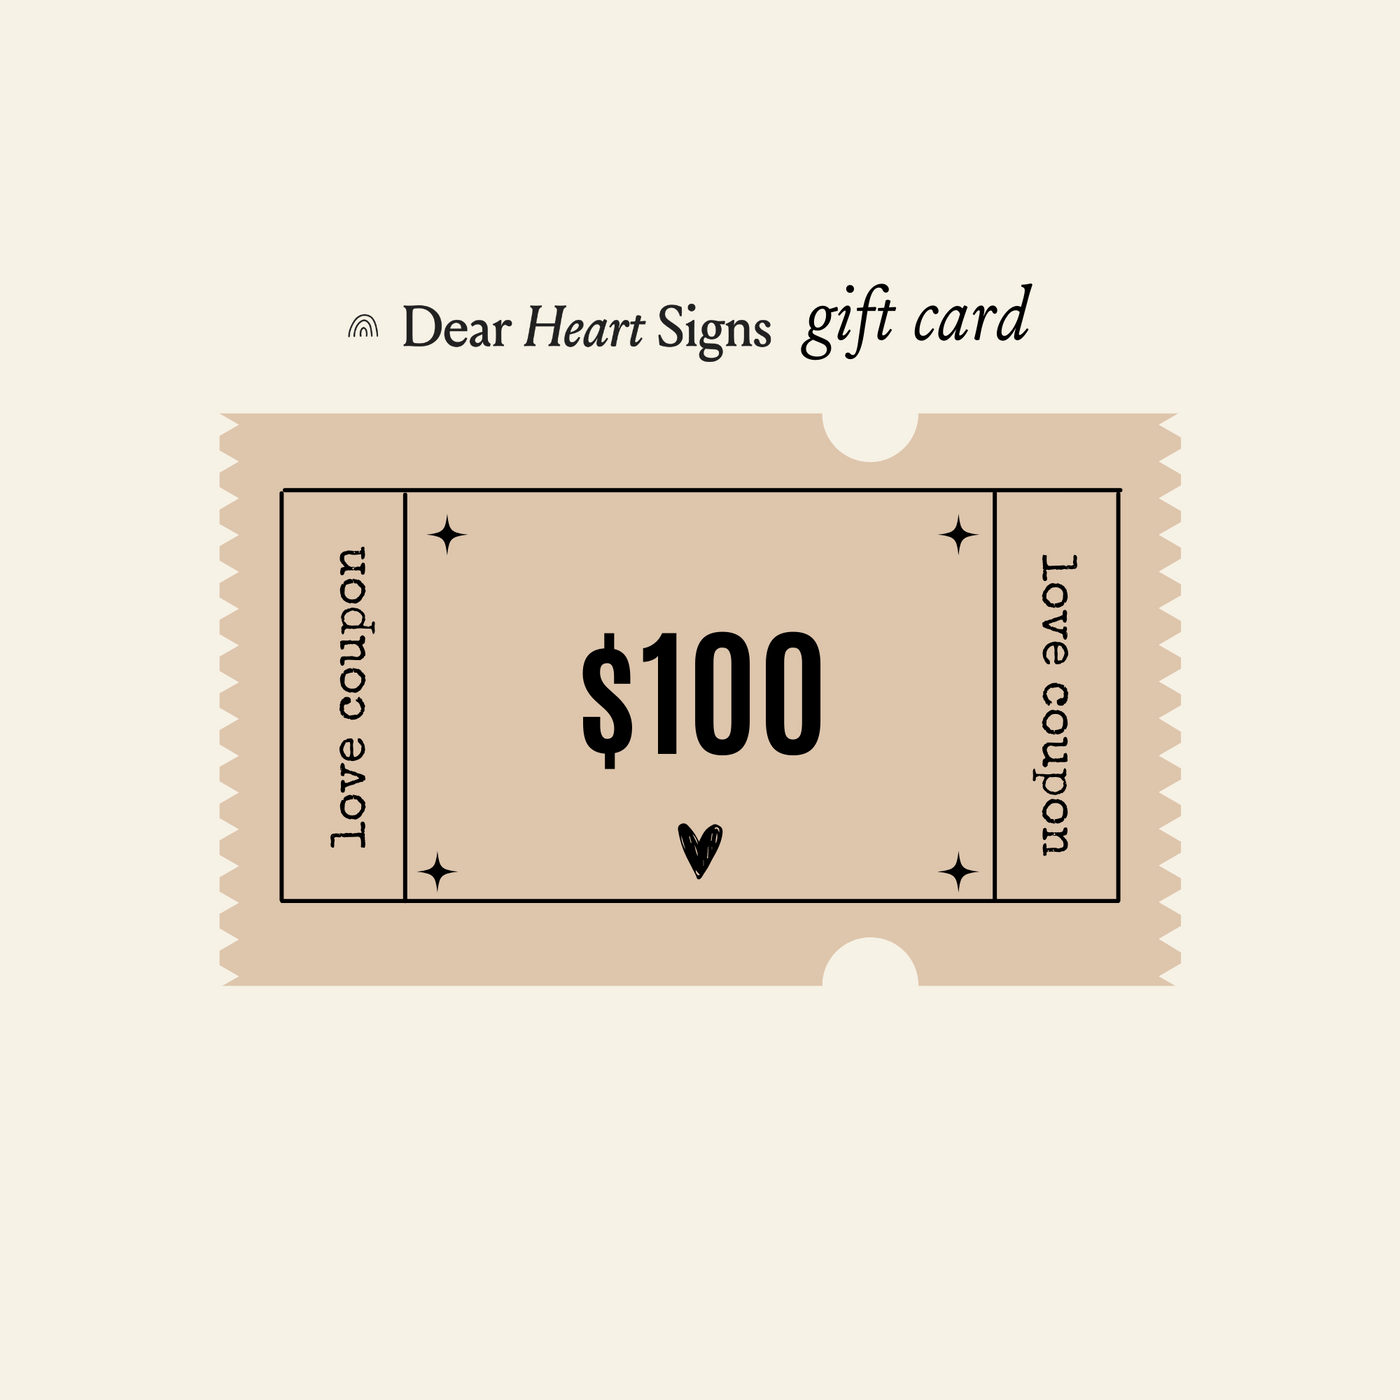 Dear Heart Signs Gift Card